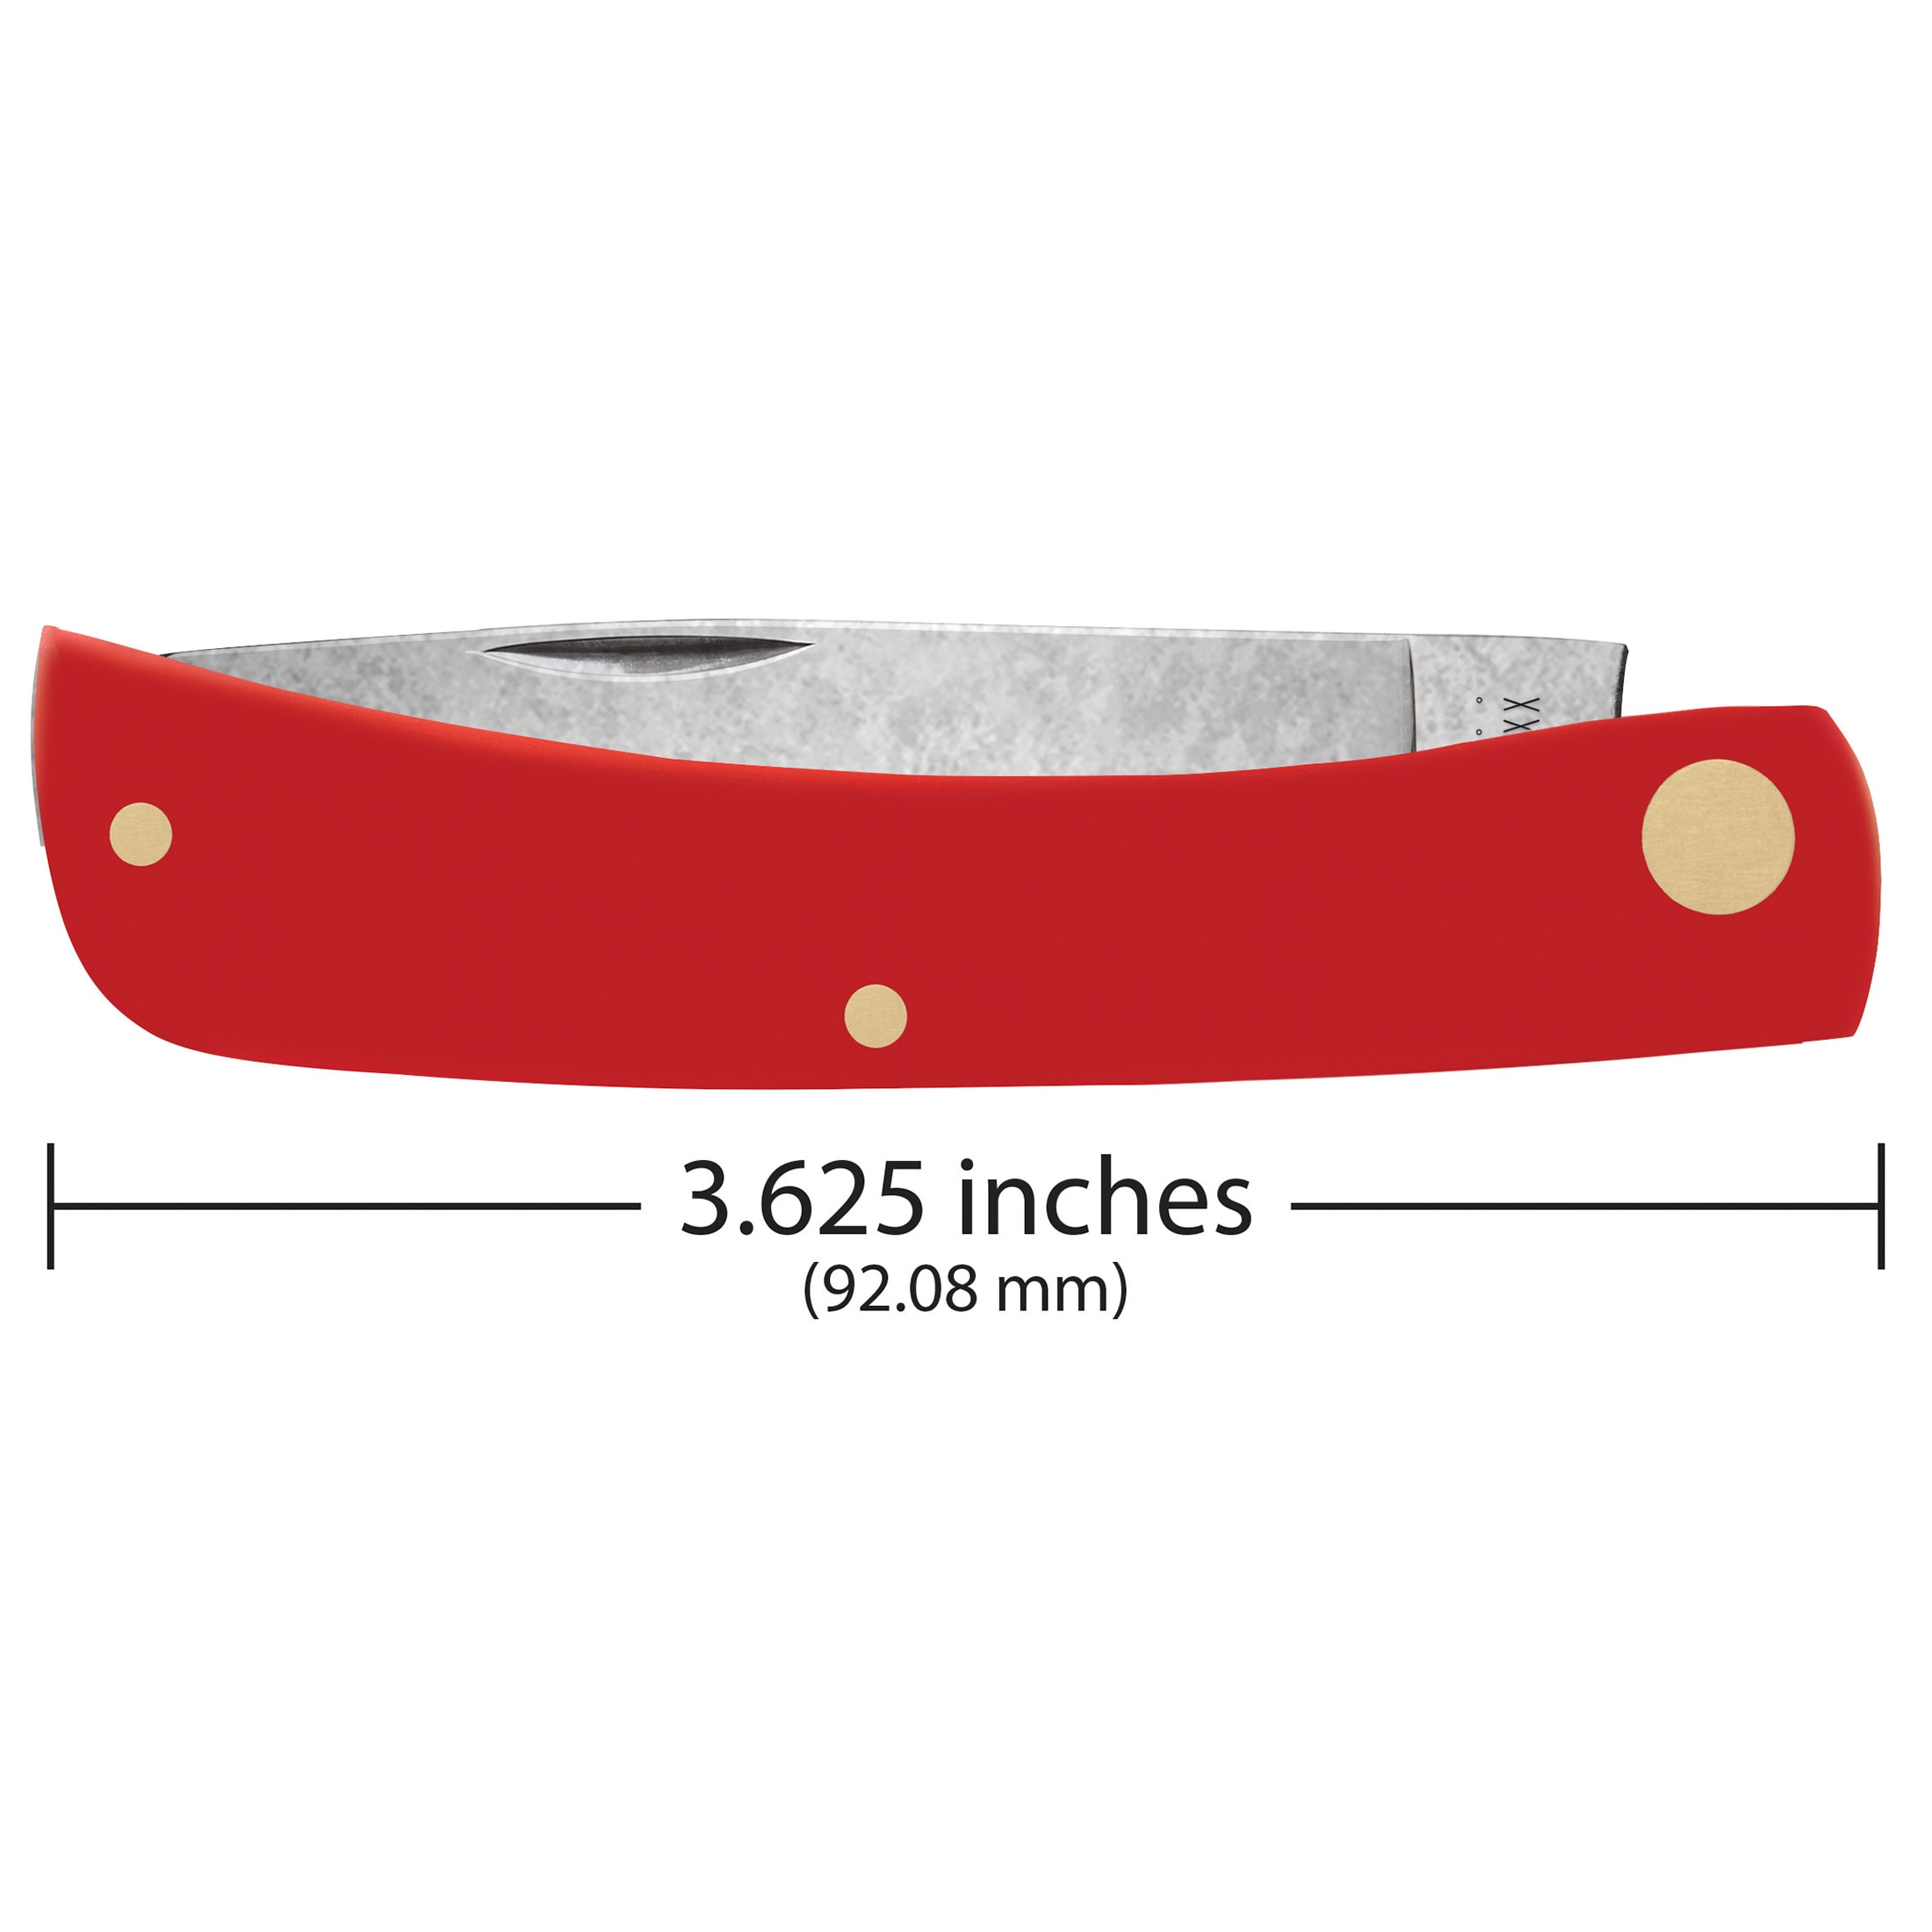 Case Cutlery 2.8-in Carbon Steel Skinner Pocket Knife at